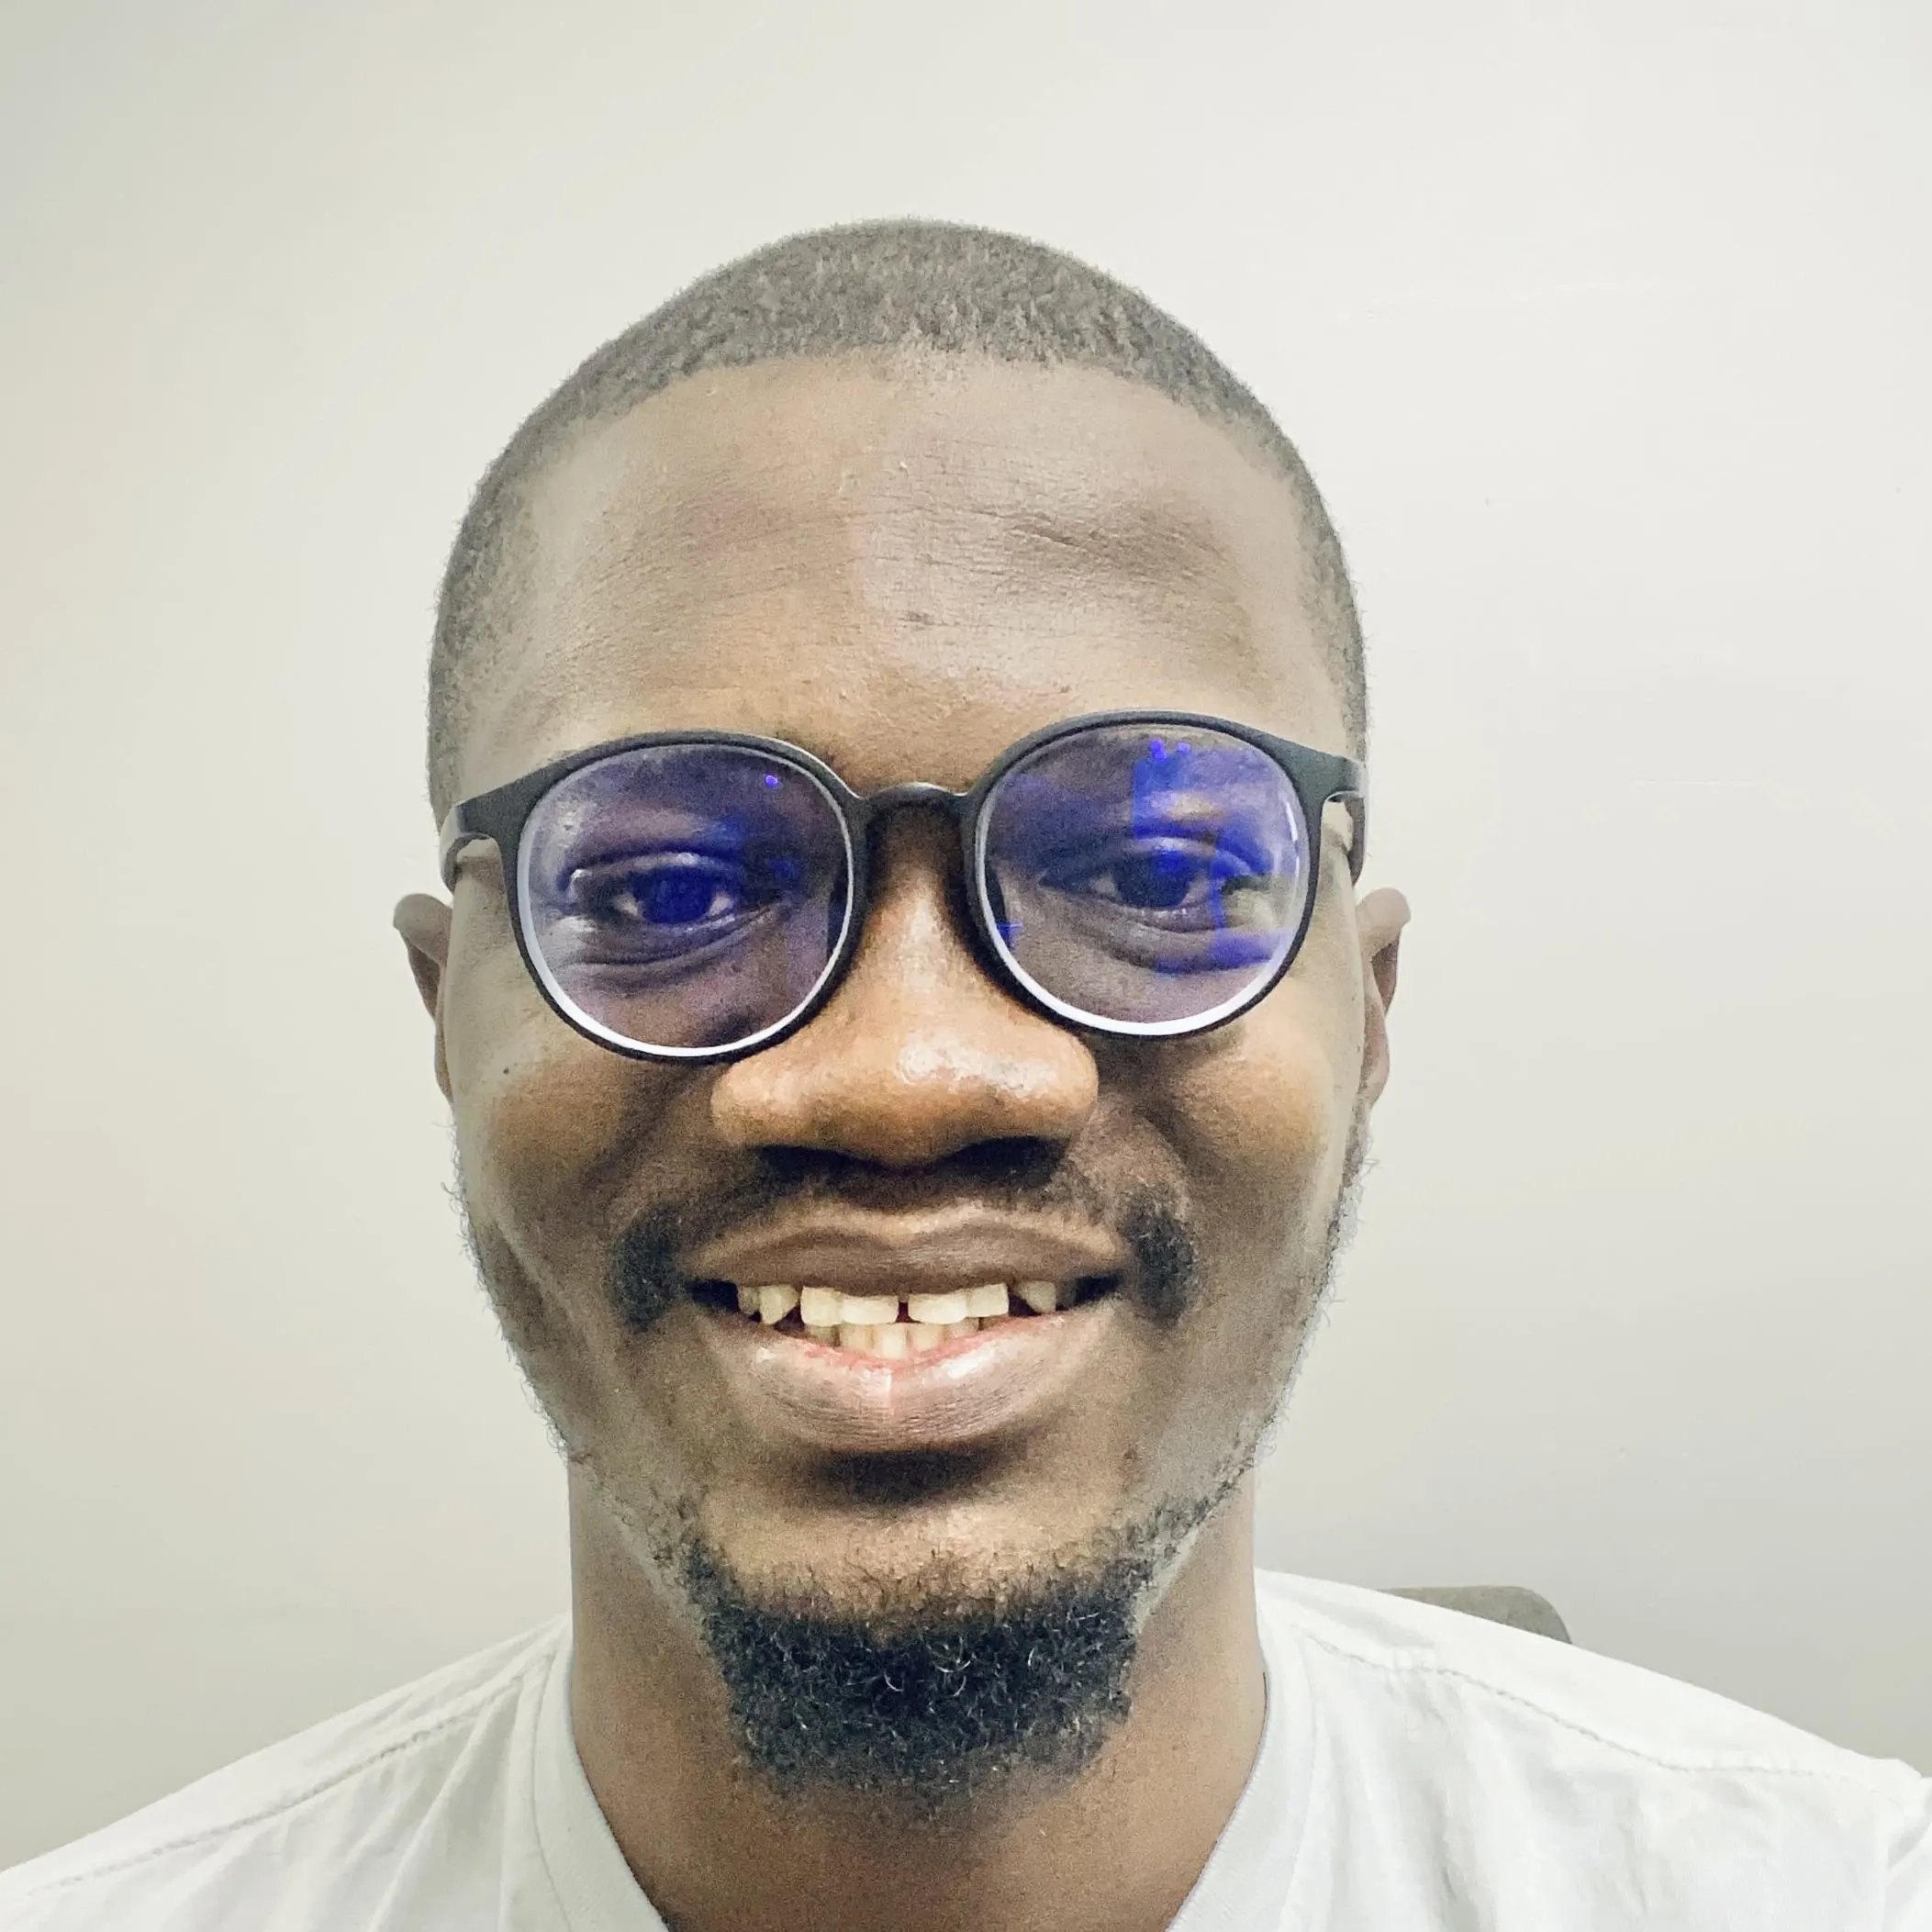 Uzochukwu Okafor's avatar